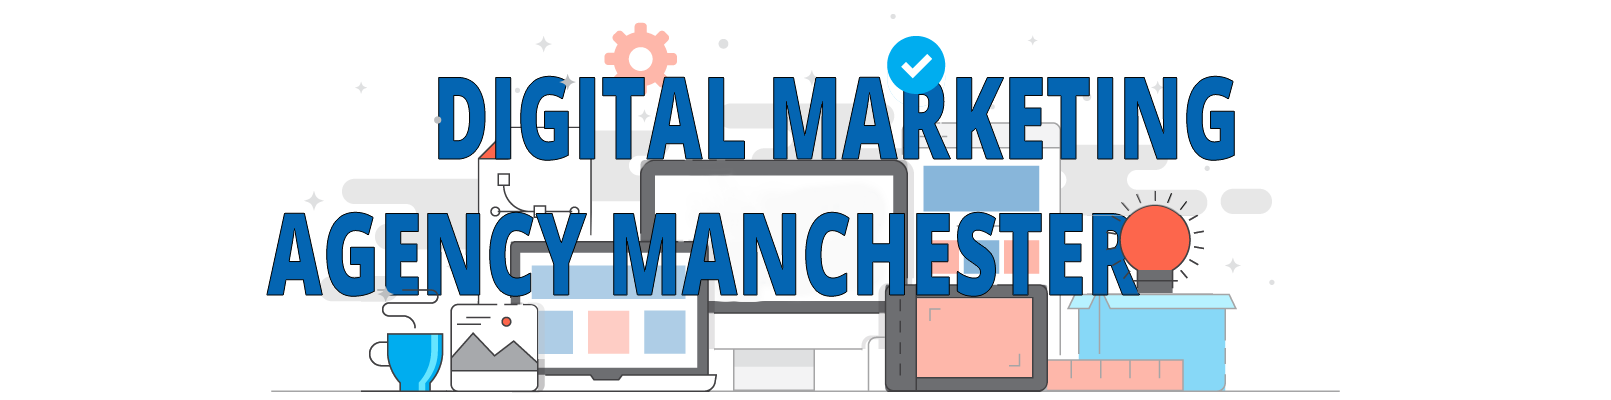 Results-oriented Digital Marketing Agency Manchester: Seek ...